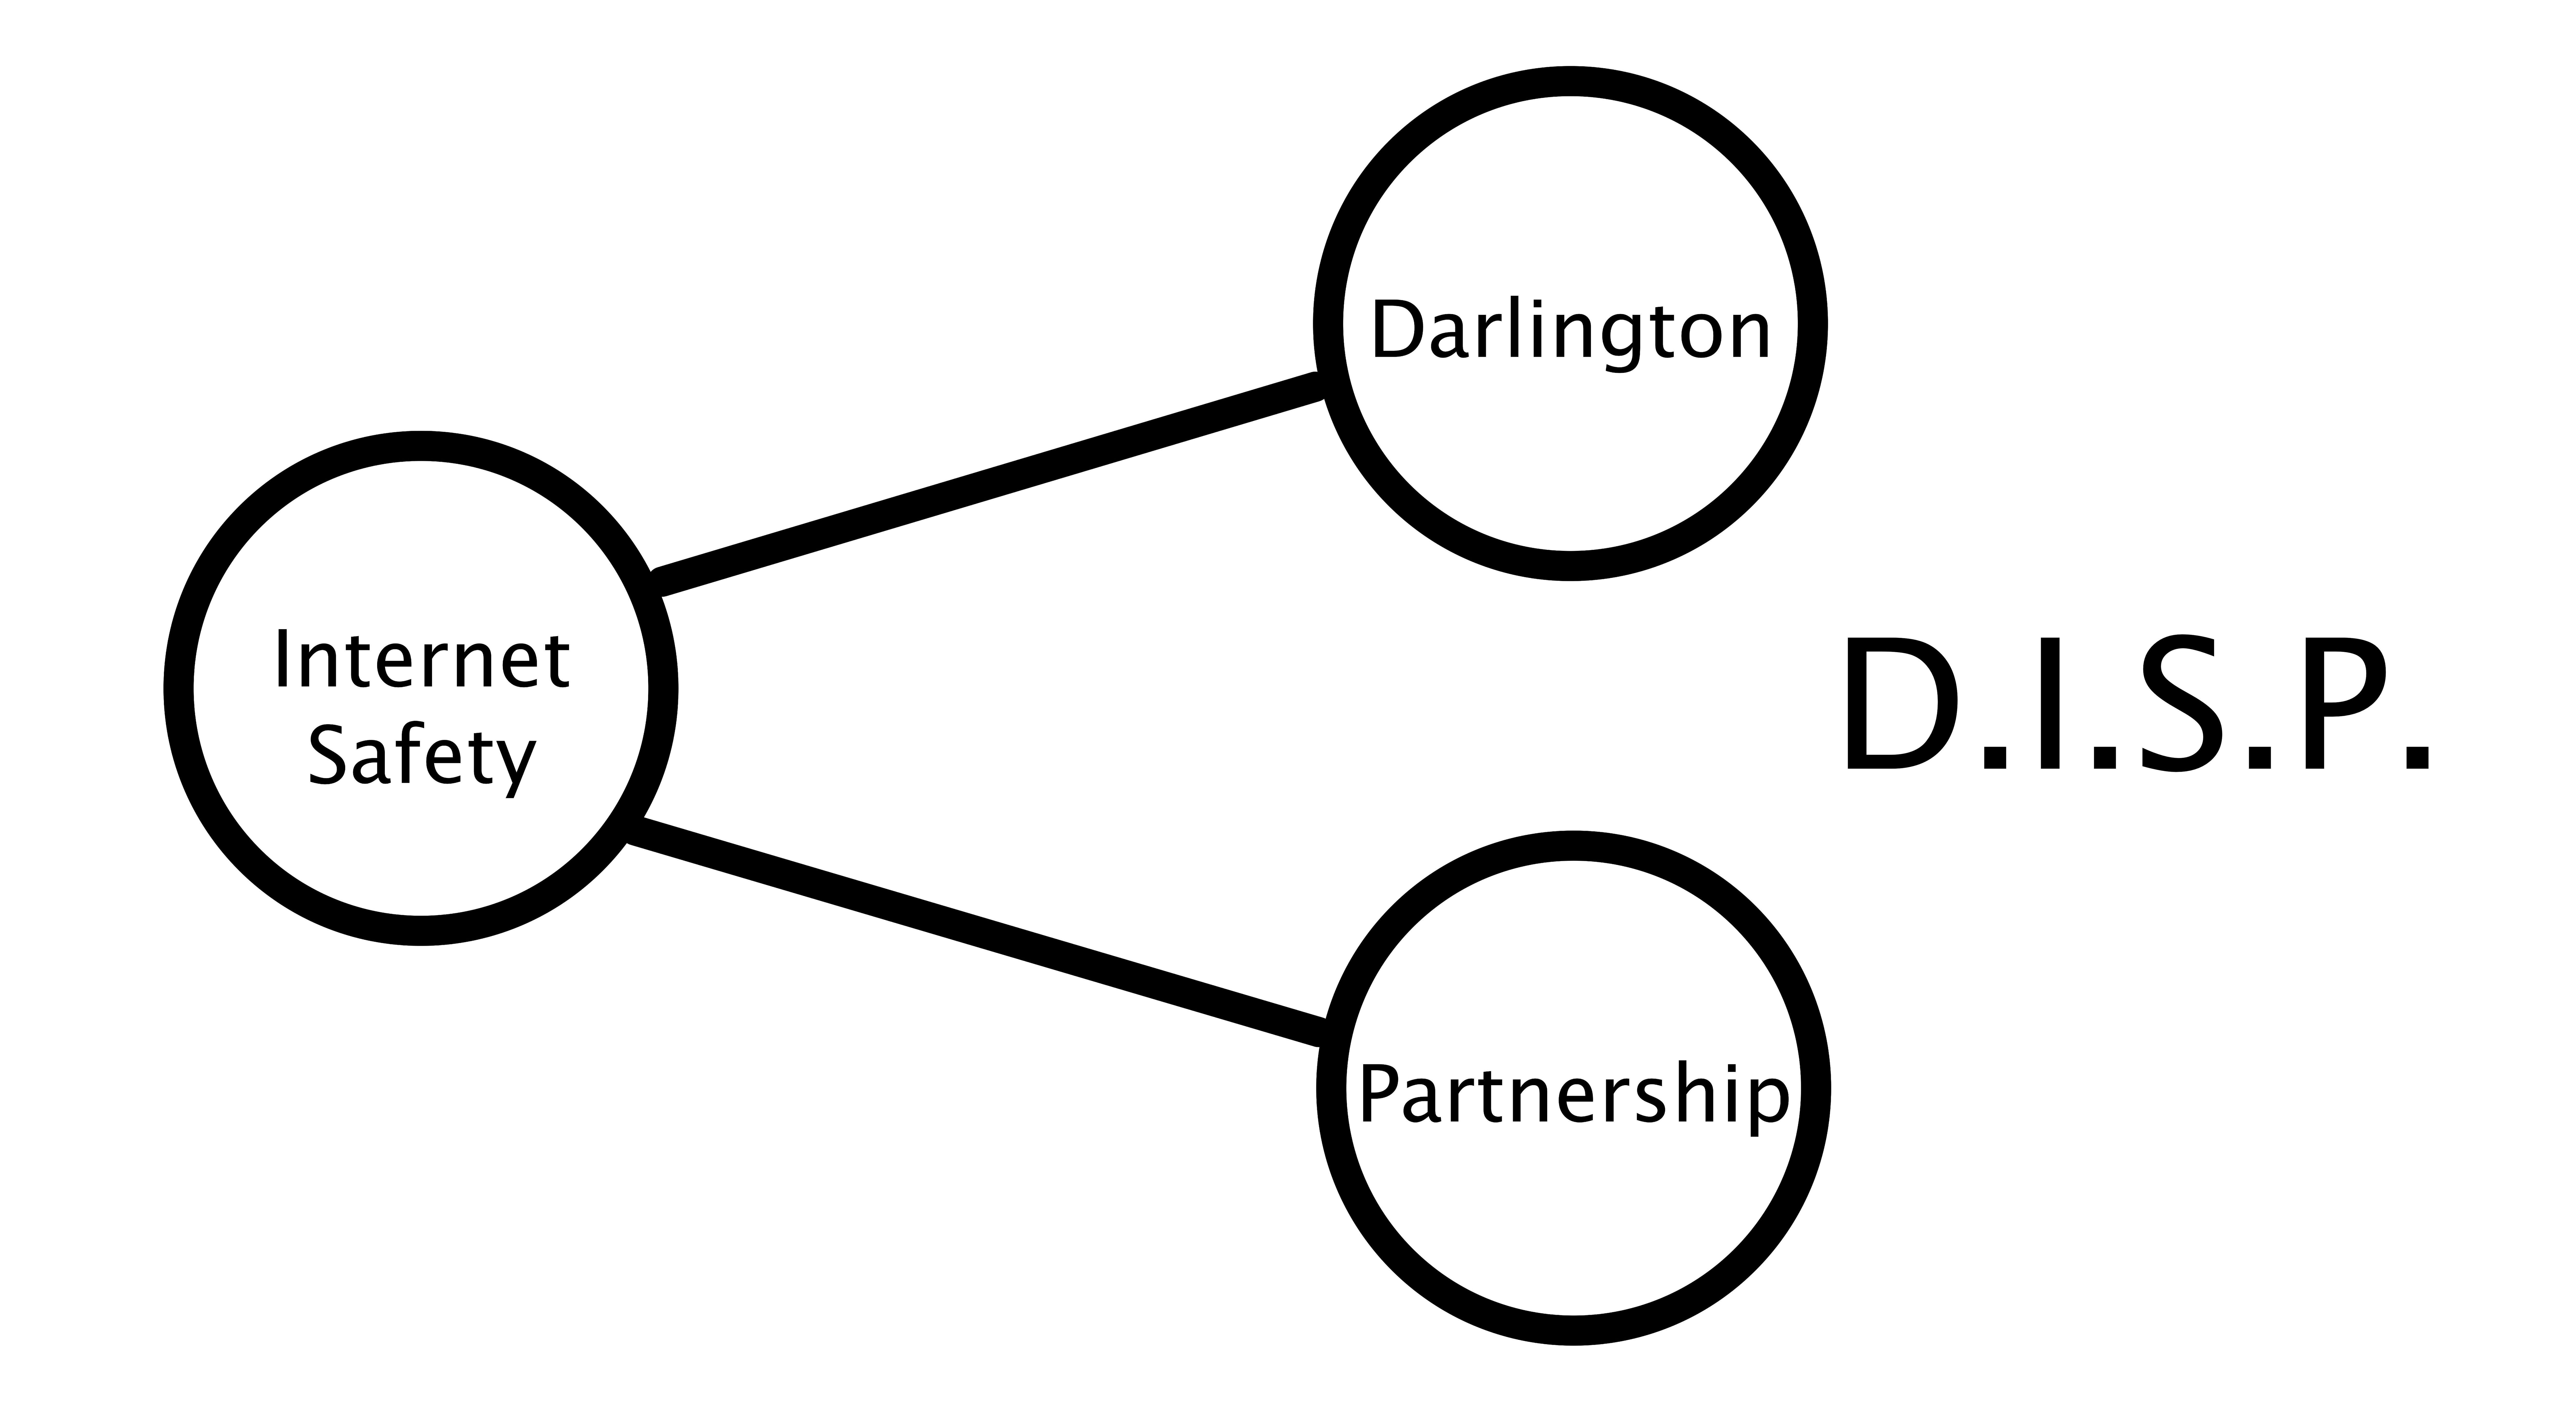 Darlington Internet Safety Partnership